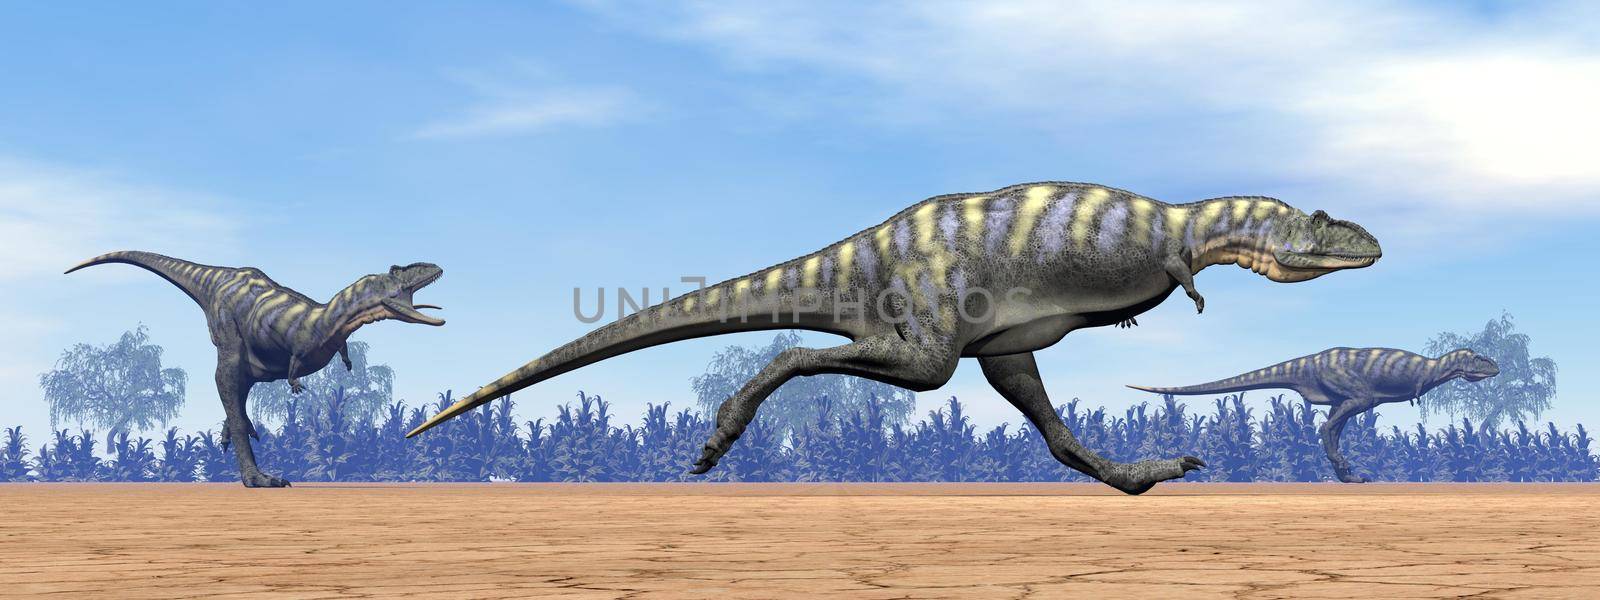 Aucasaurus dinosaurs running - 3D render by Elenaphotos21